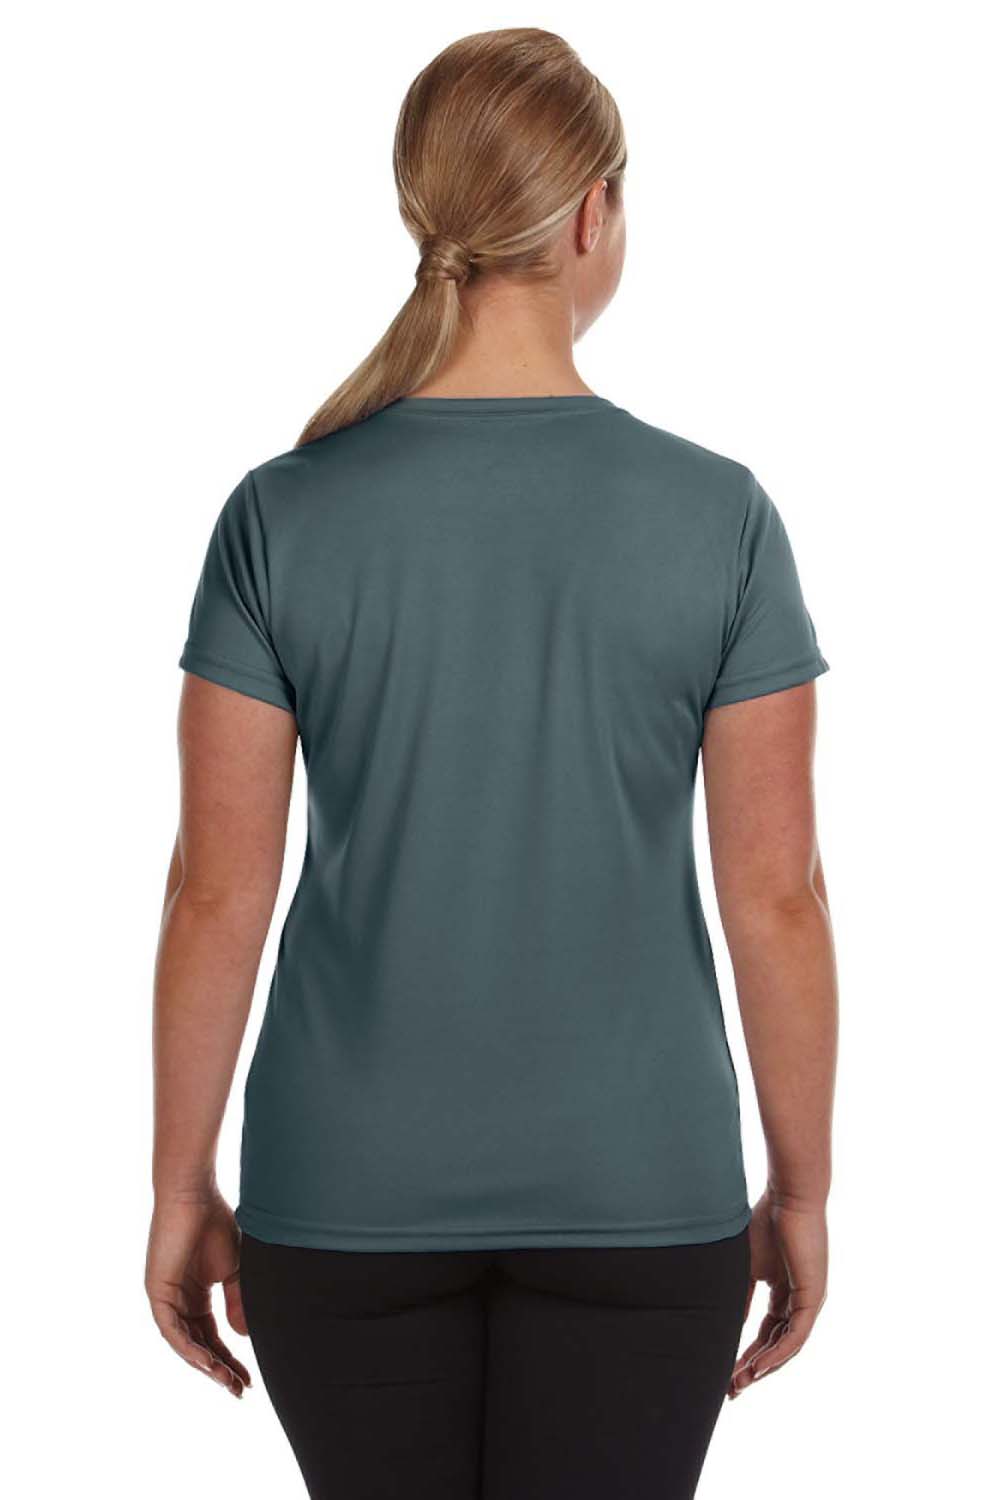 Augusta Sportswear 1790 Womens Moisture Wicking Short Sleeve V-Neck T-Shirt Graphite Grey Model Back